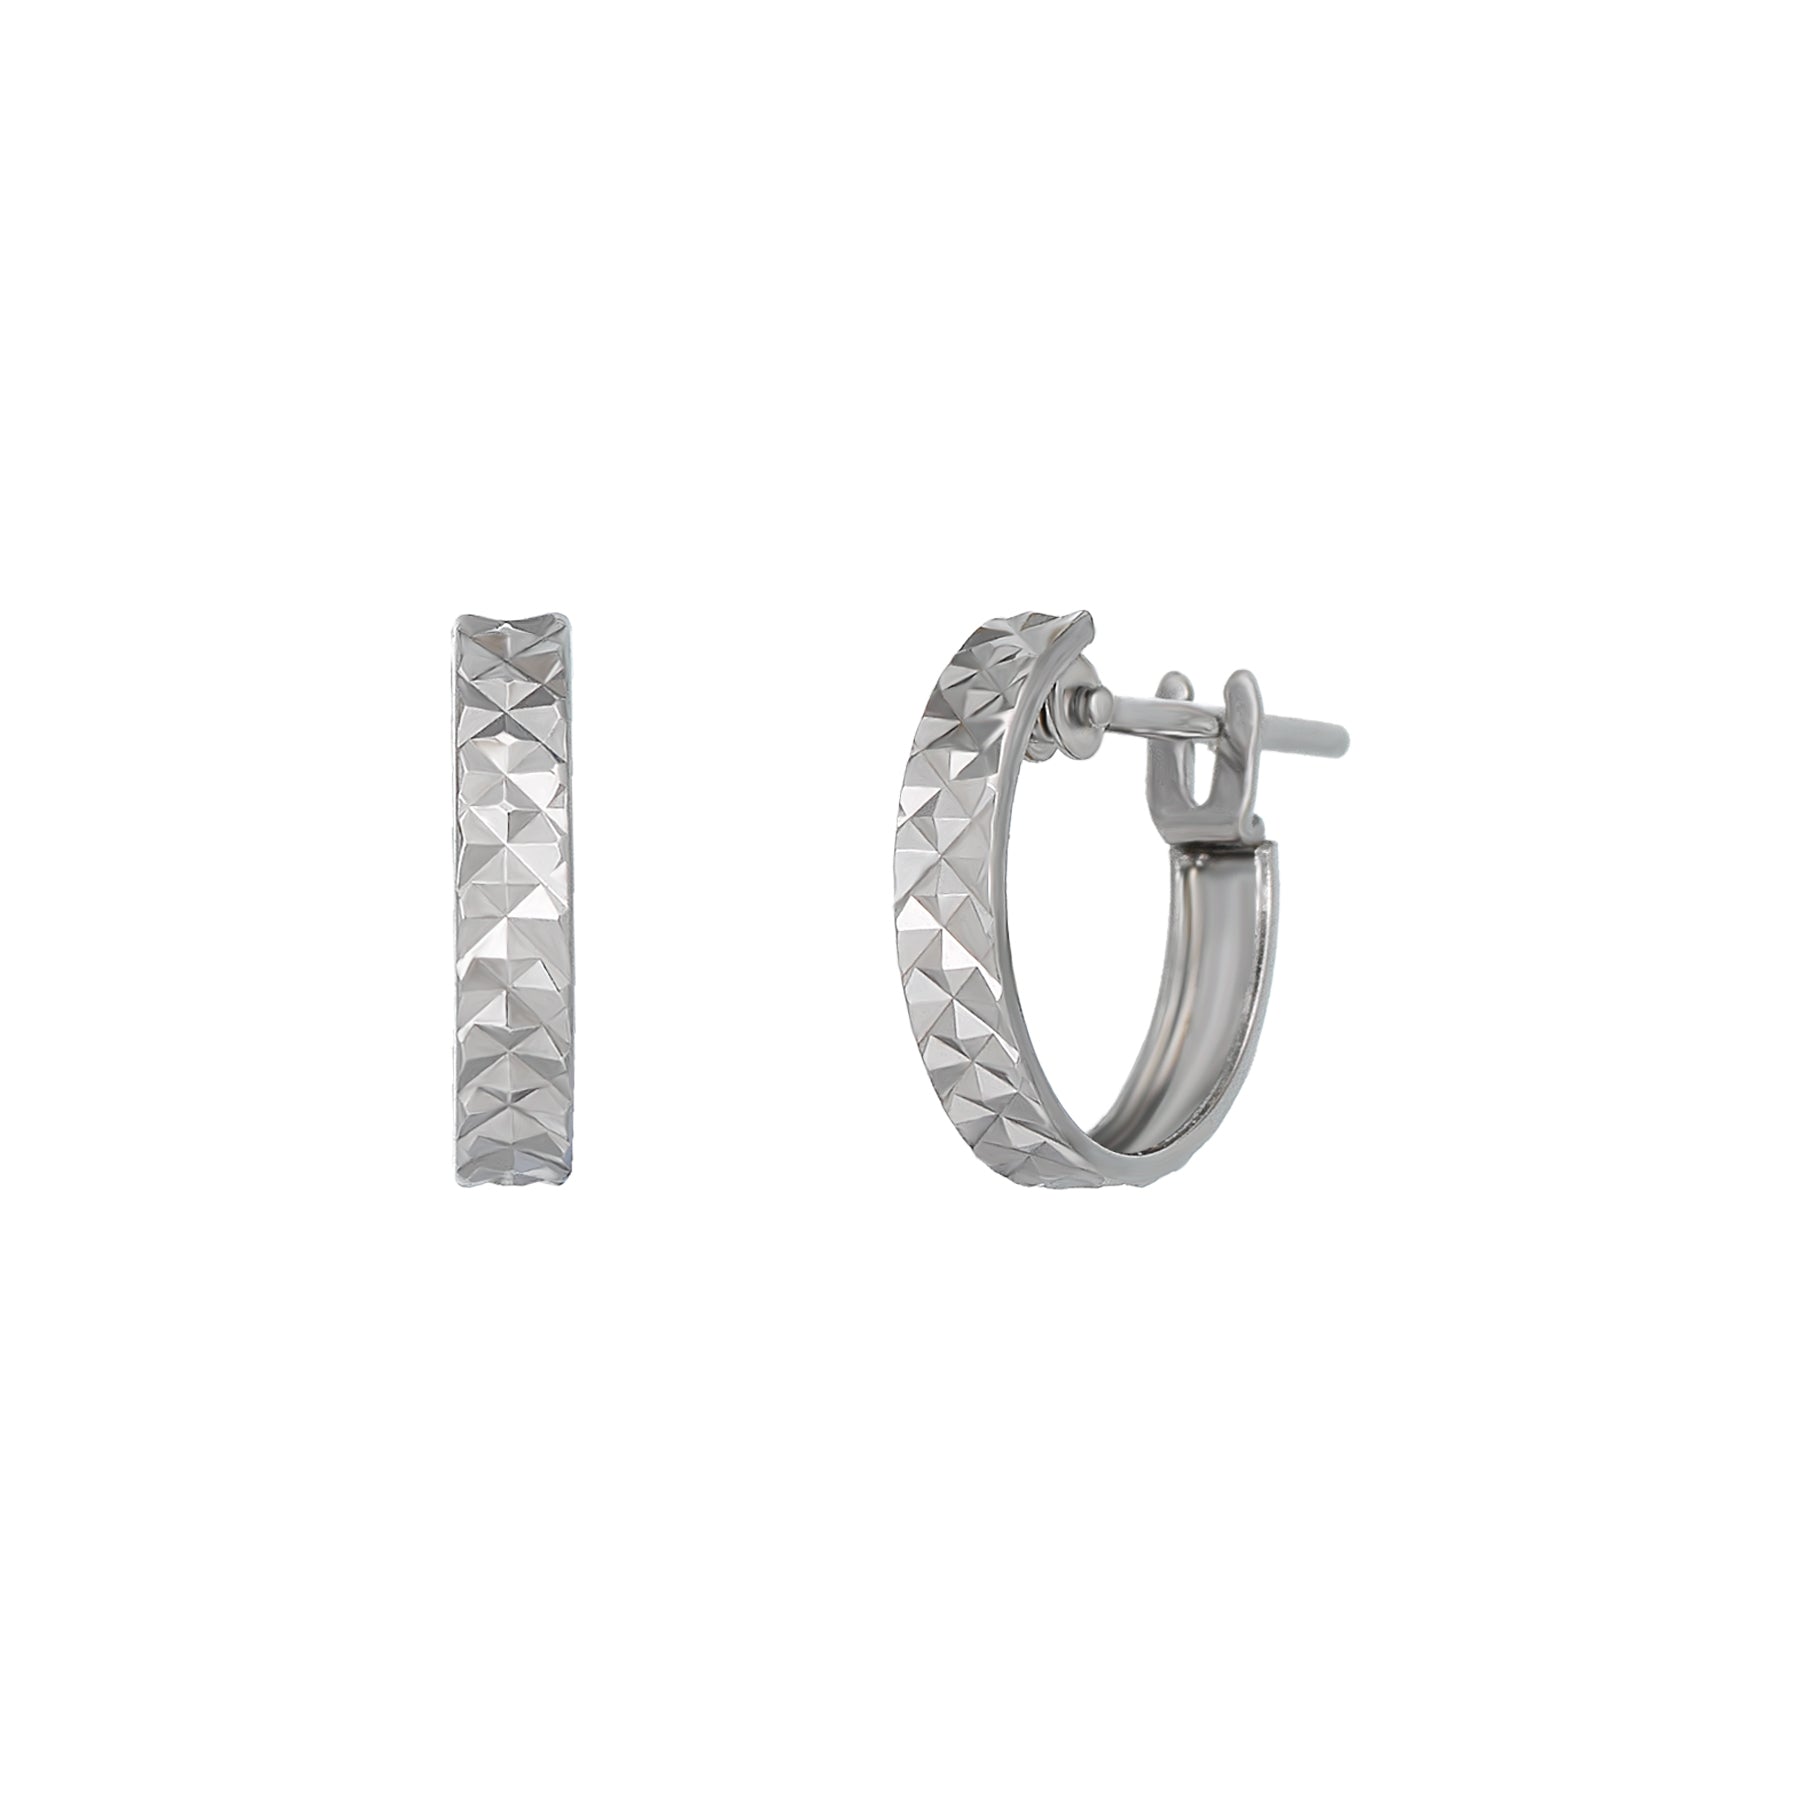 14K/10K White Gold Pyramid Cut Cut Hoop Earrings - Product Image